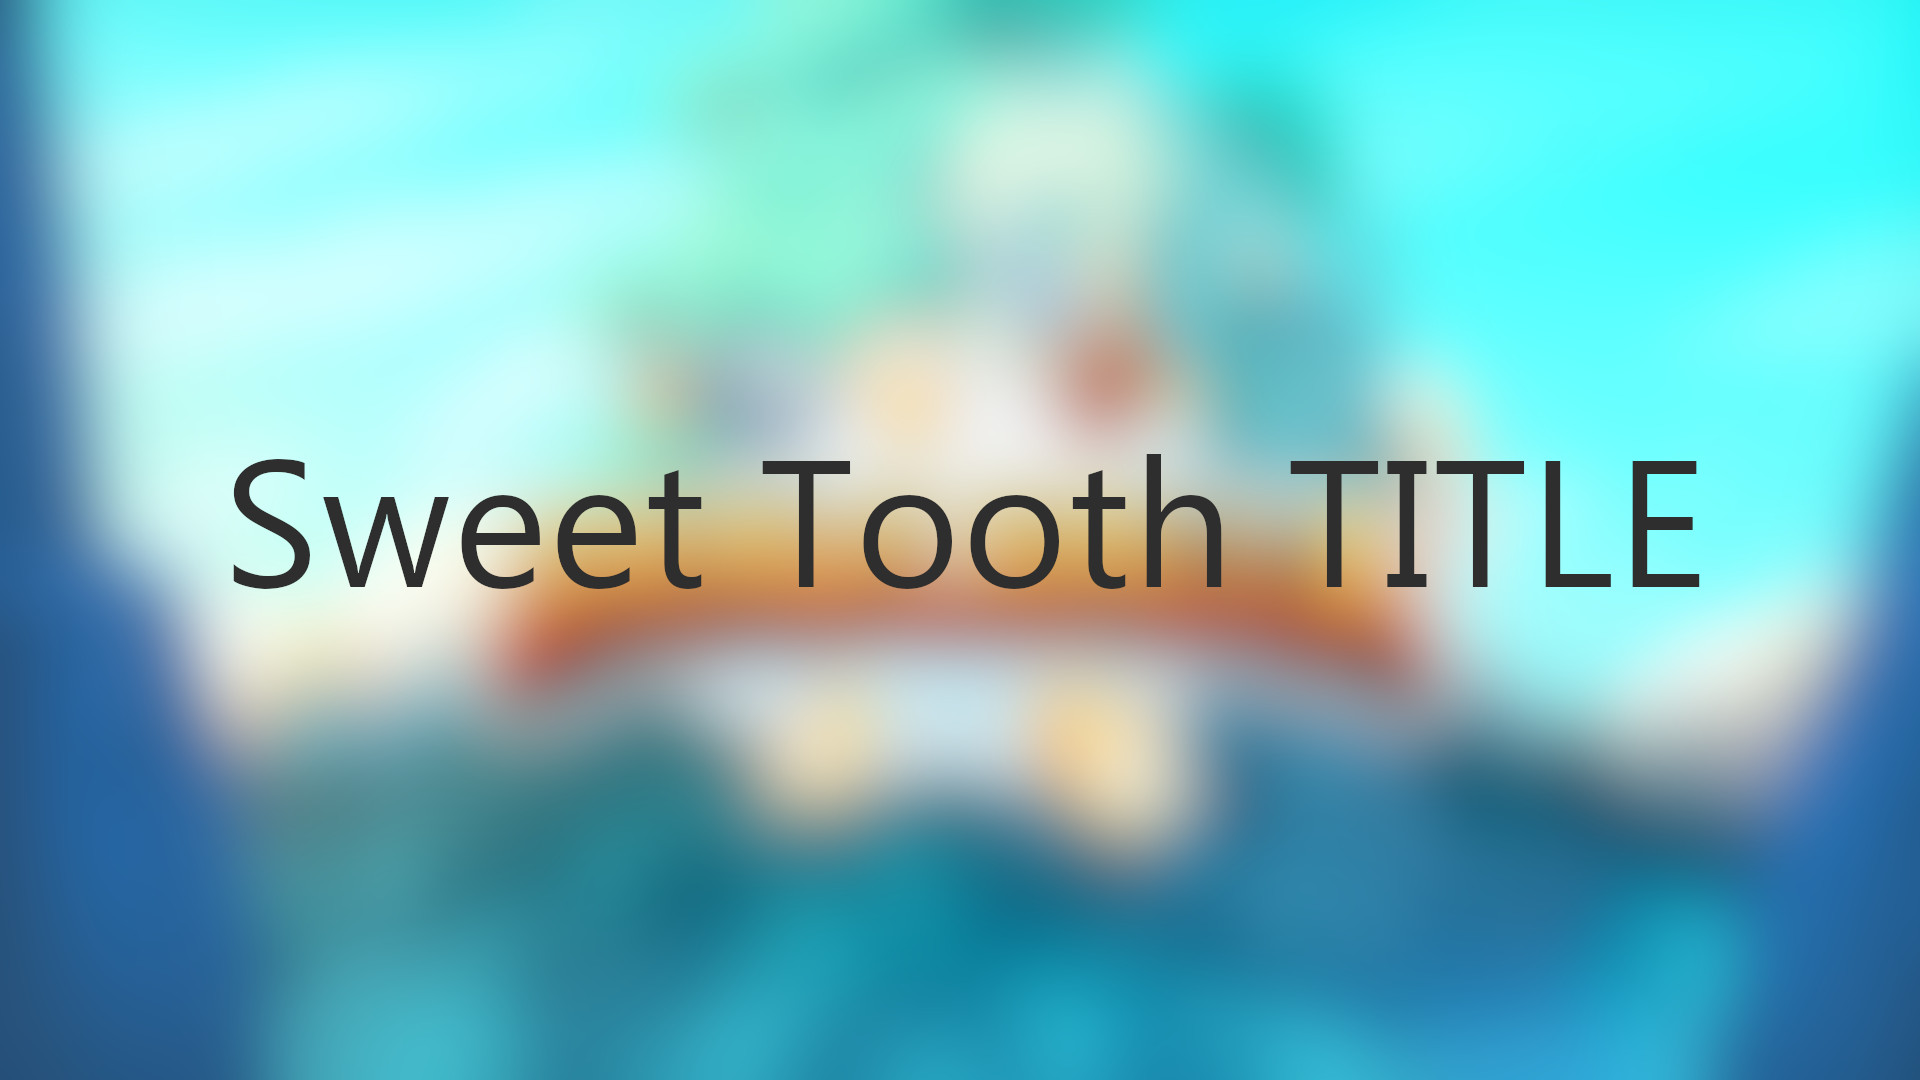 Brawlhalla - Sweet Tooth Title DLC CD Key, 1.12 usd